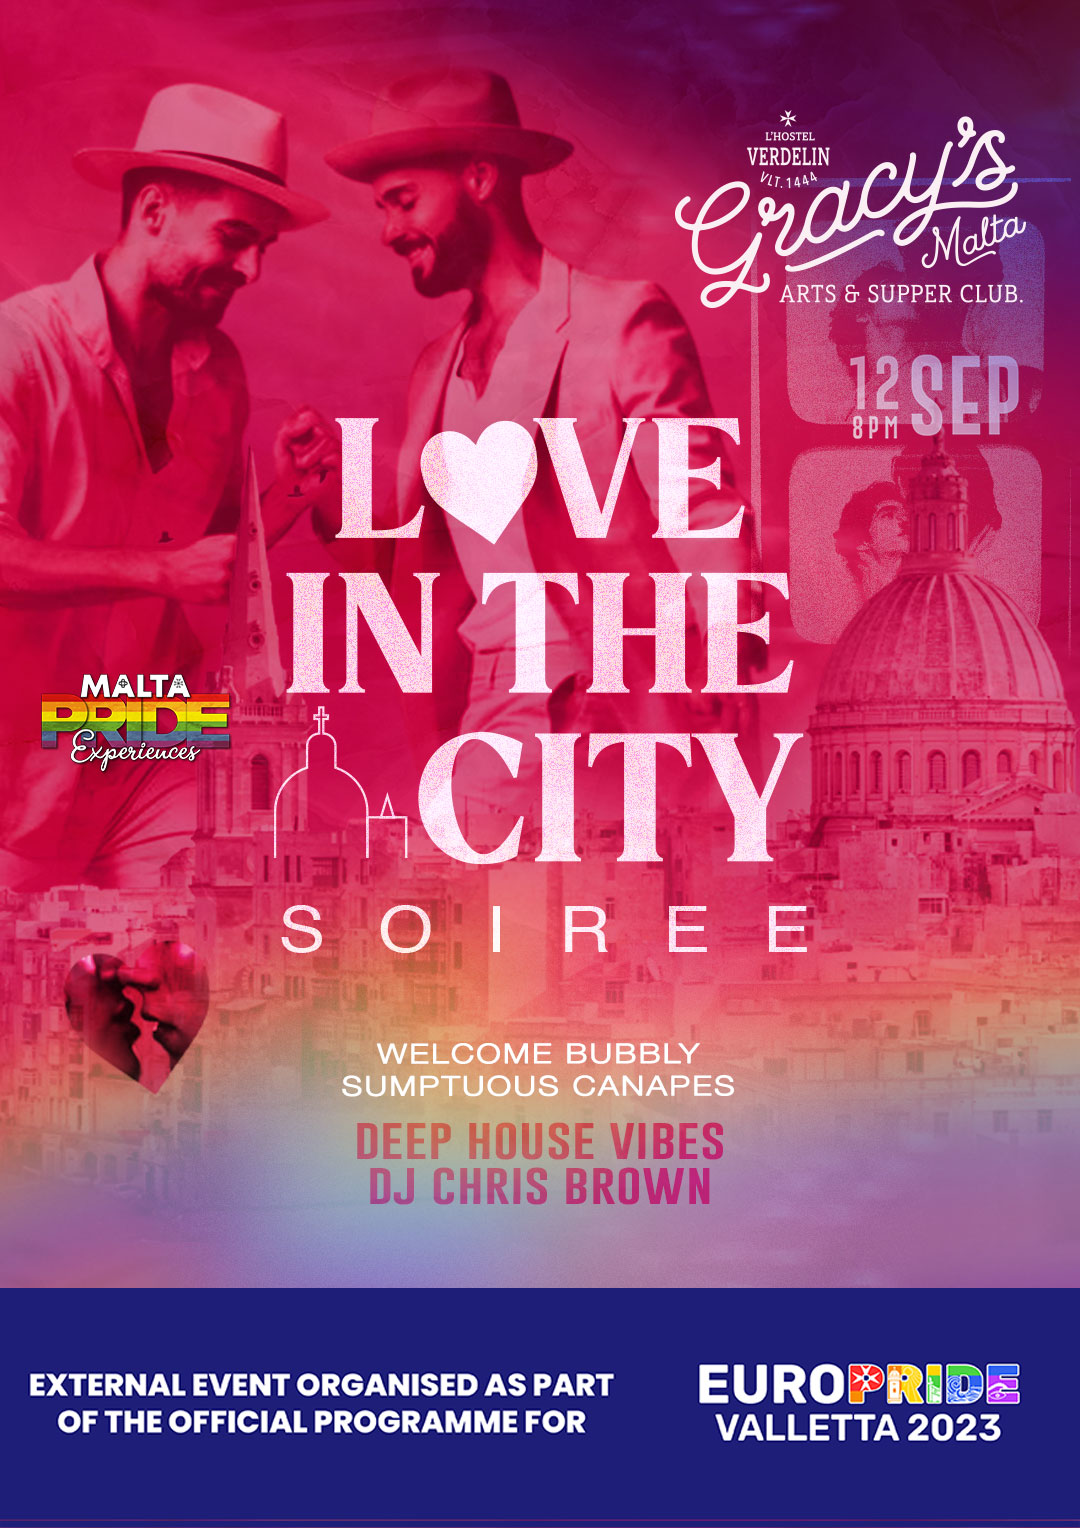 EUROPRIDE 2023 - Love in the City Soirée - Mixer Event poster